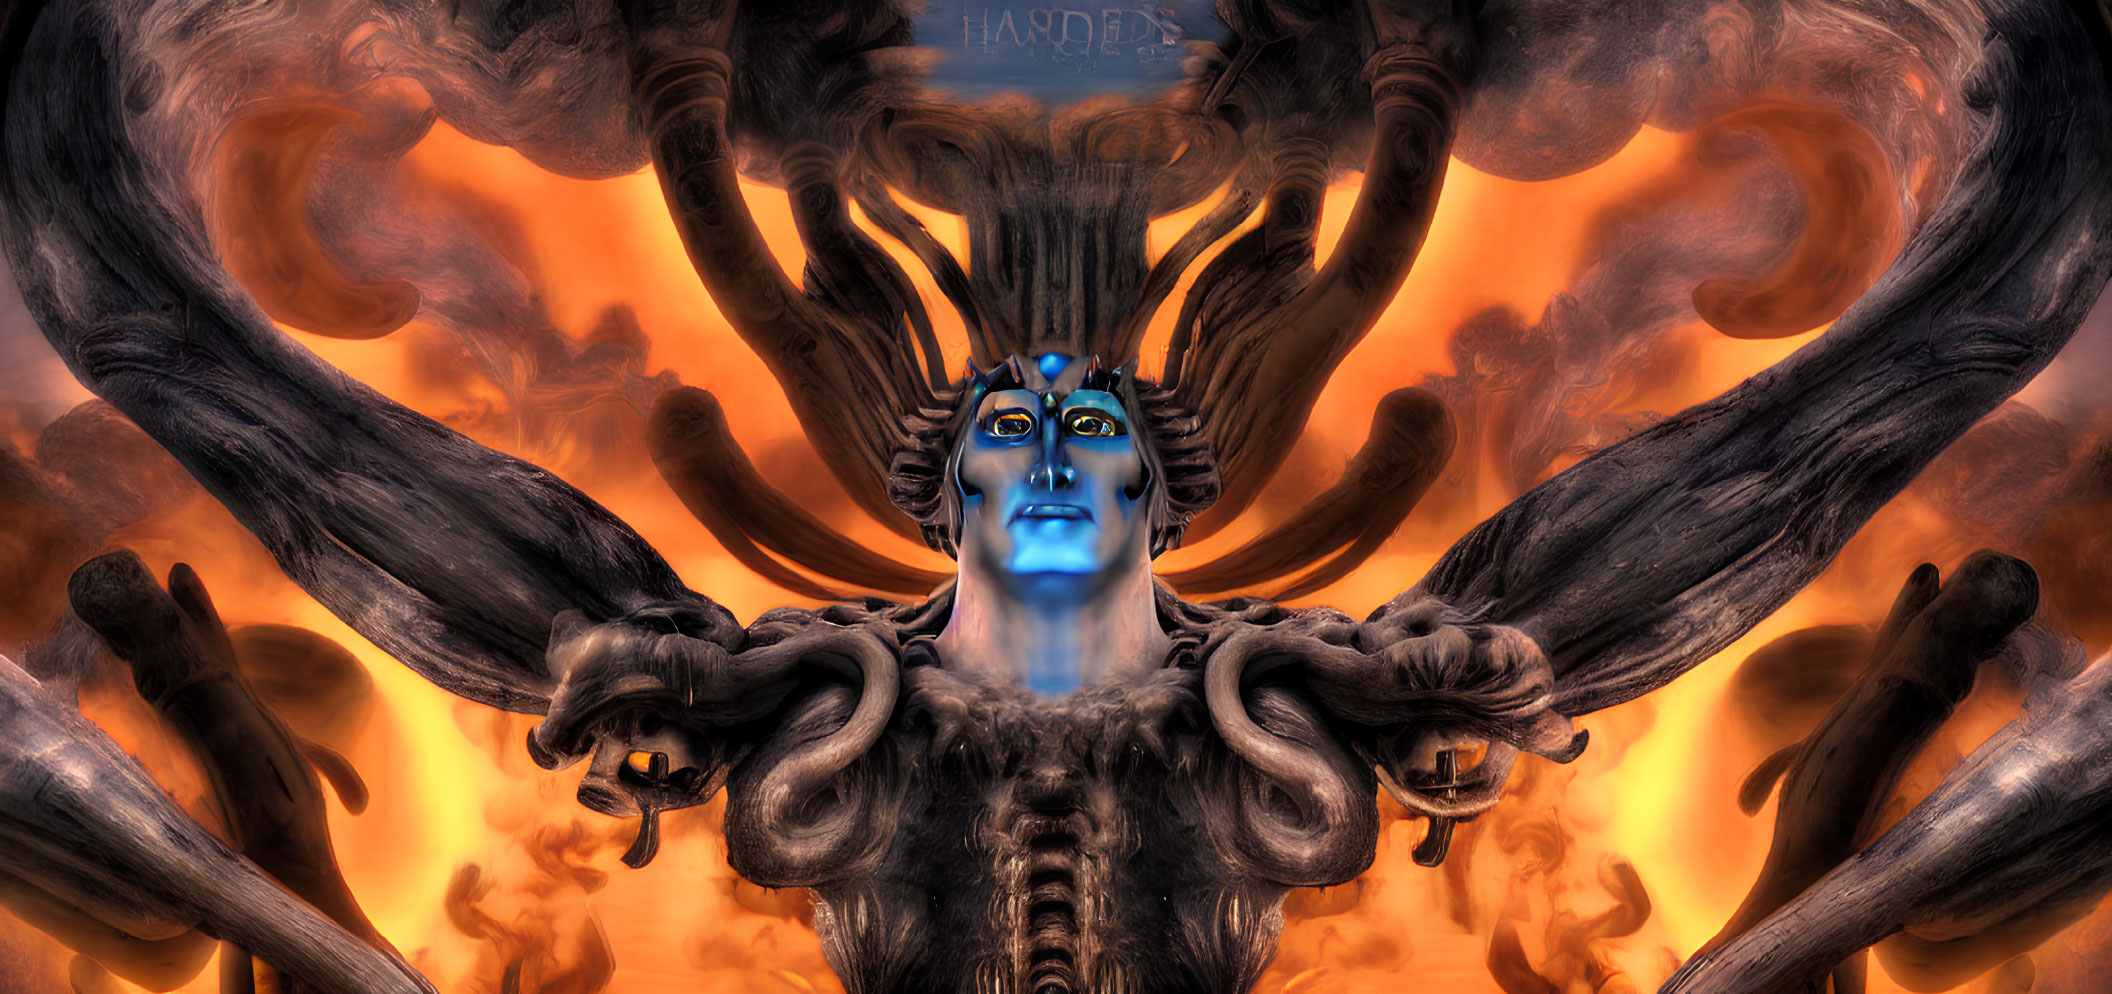 Blue-skinned alien-like figure with intricate headgear and tattoos in fiery background.